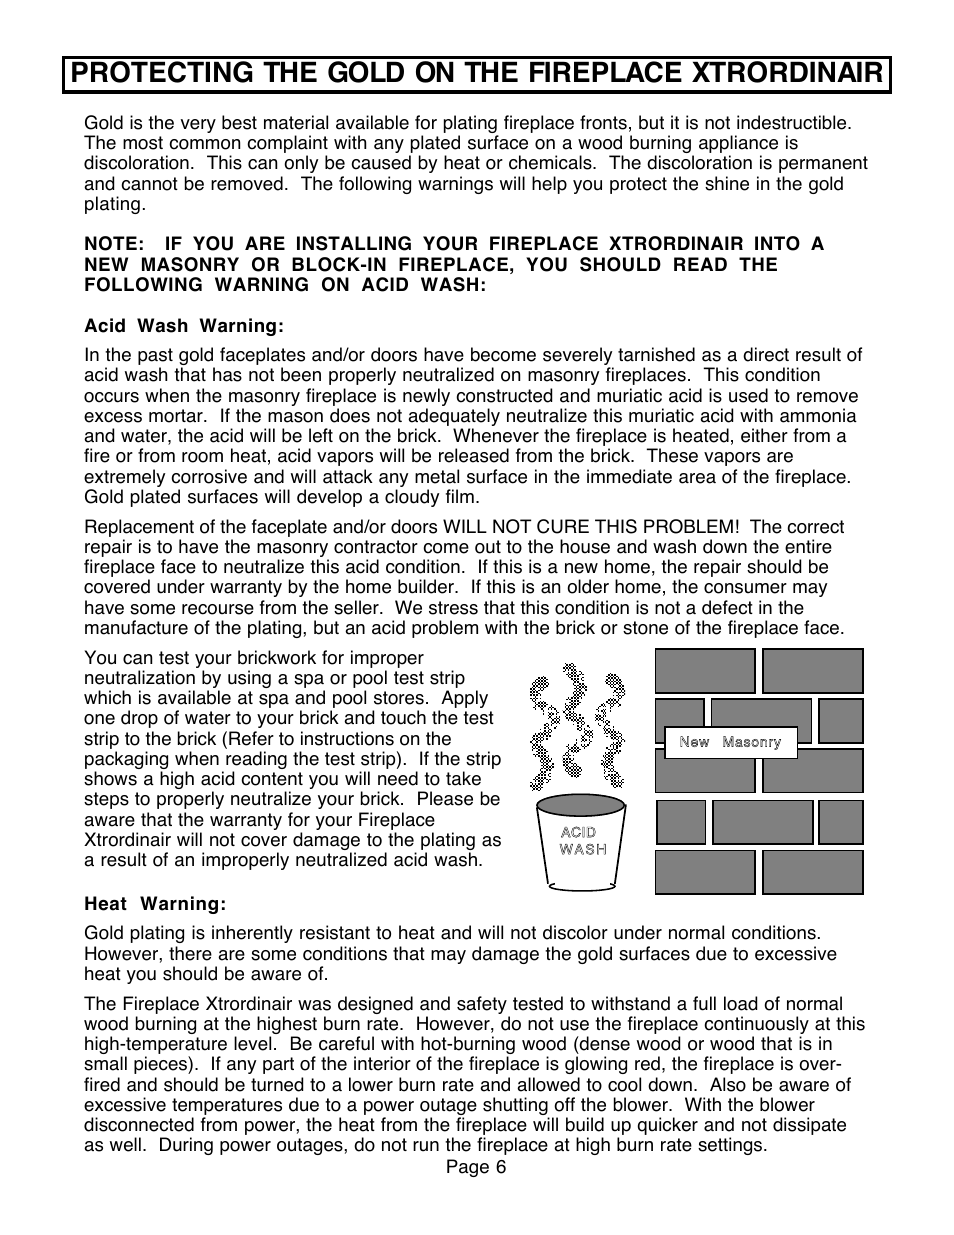 Protecting the gold on the fireplace xtrordinair | FireplaceXtrordinair 36A-BI User Manual | Page 6 / 30